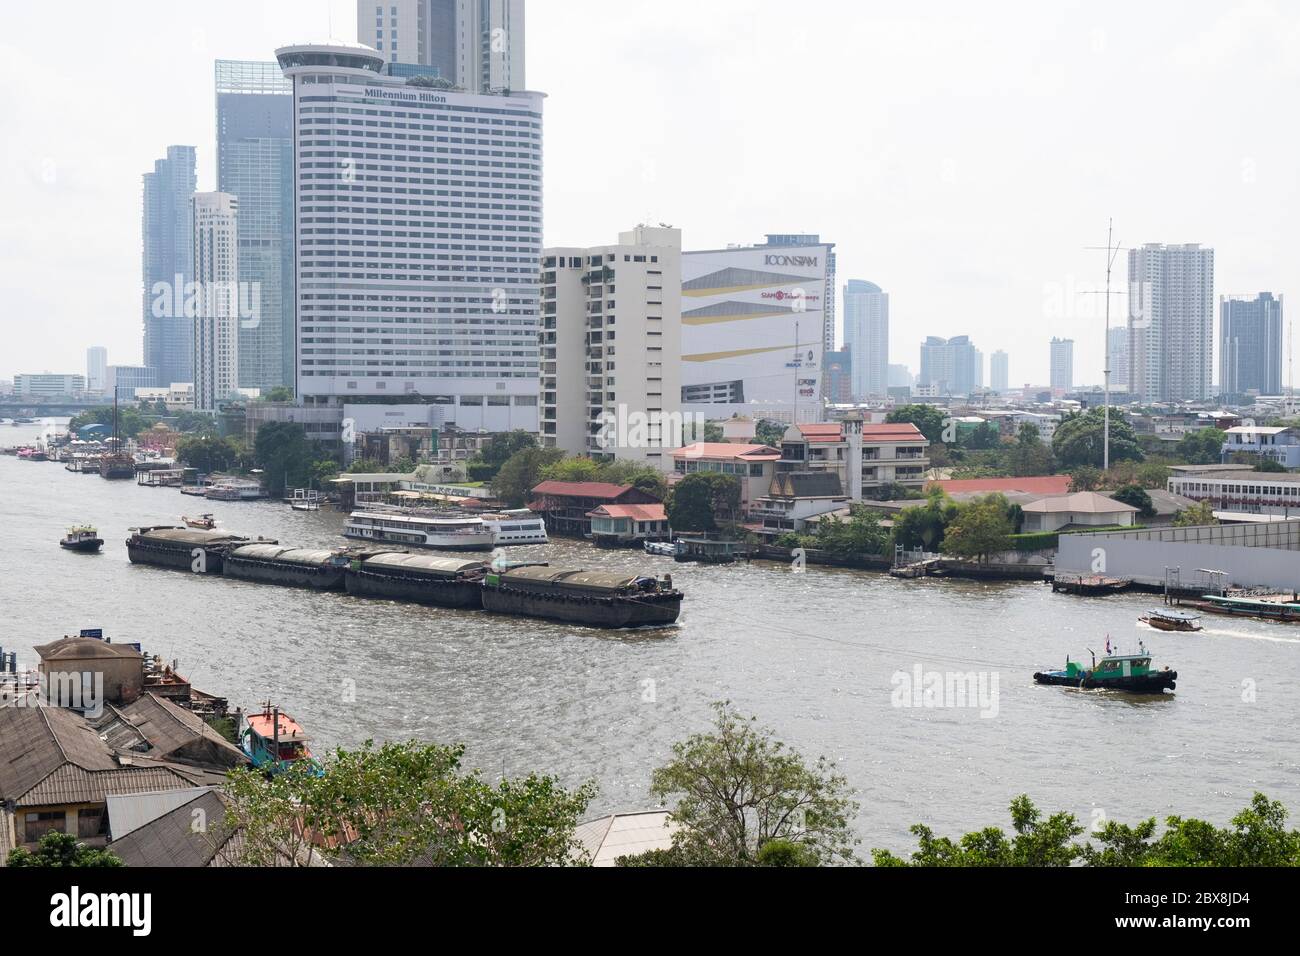 Tug boat pulling a barge on the Chao Praya river, Bangkok, Thailand, Southeast Asia. Stock Photo